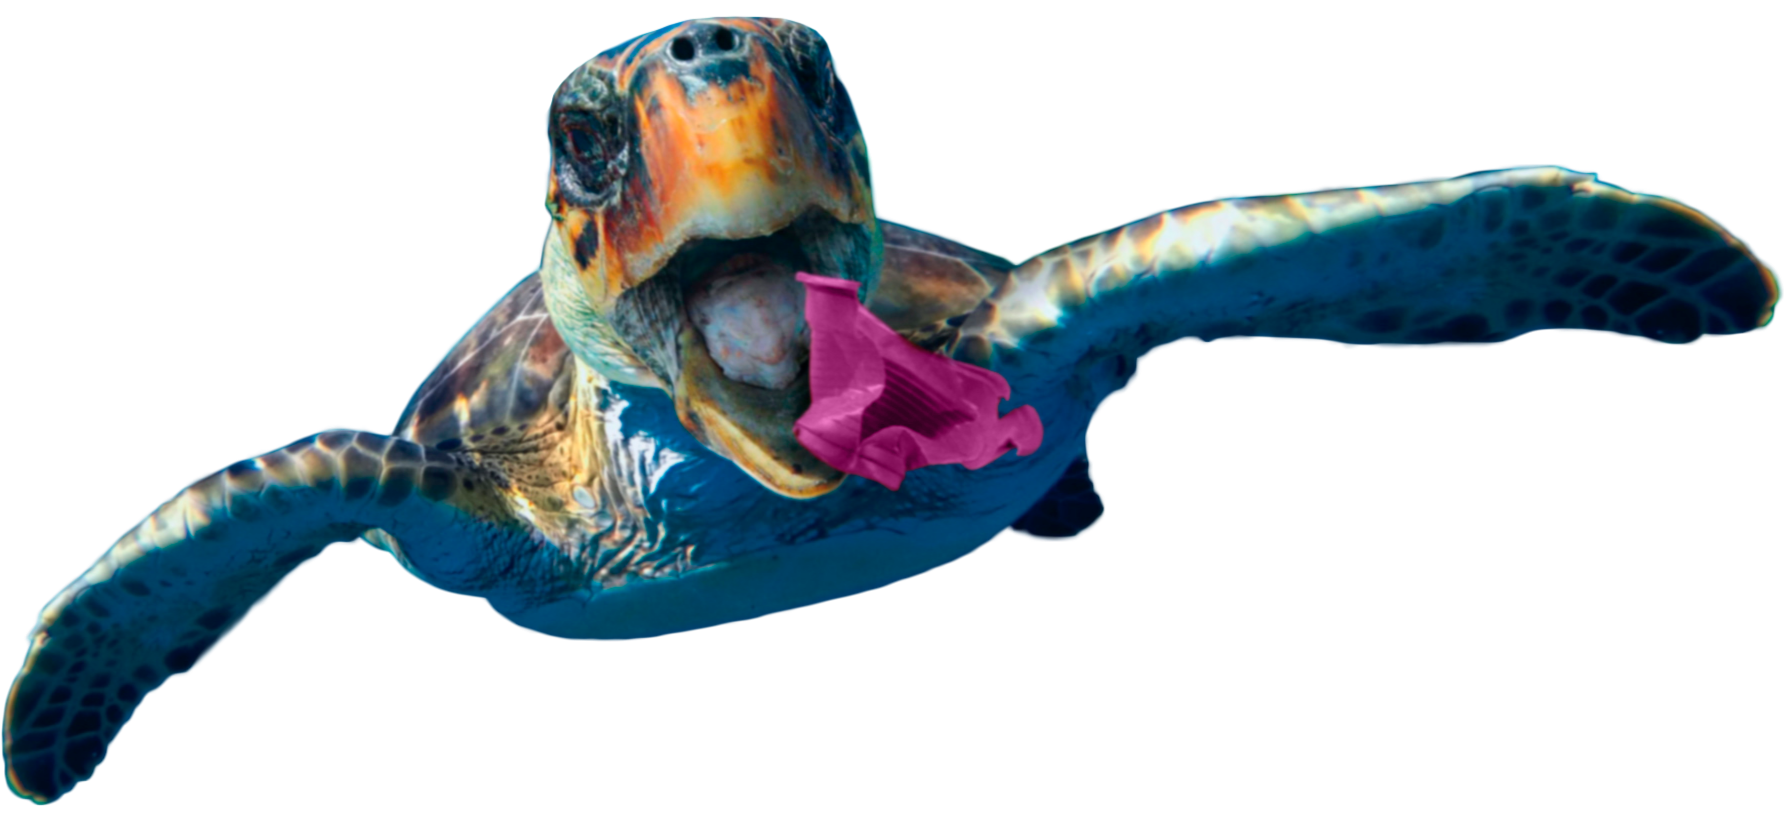 tartaruga com uma sacola presa na boca